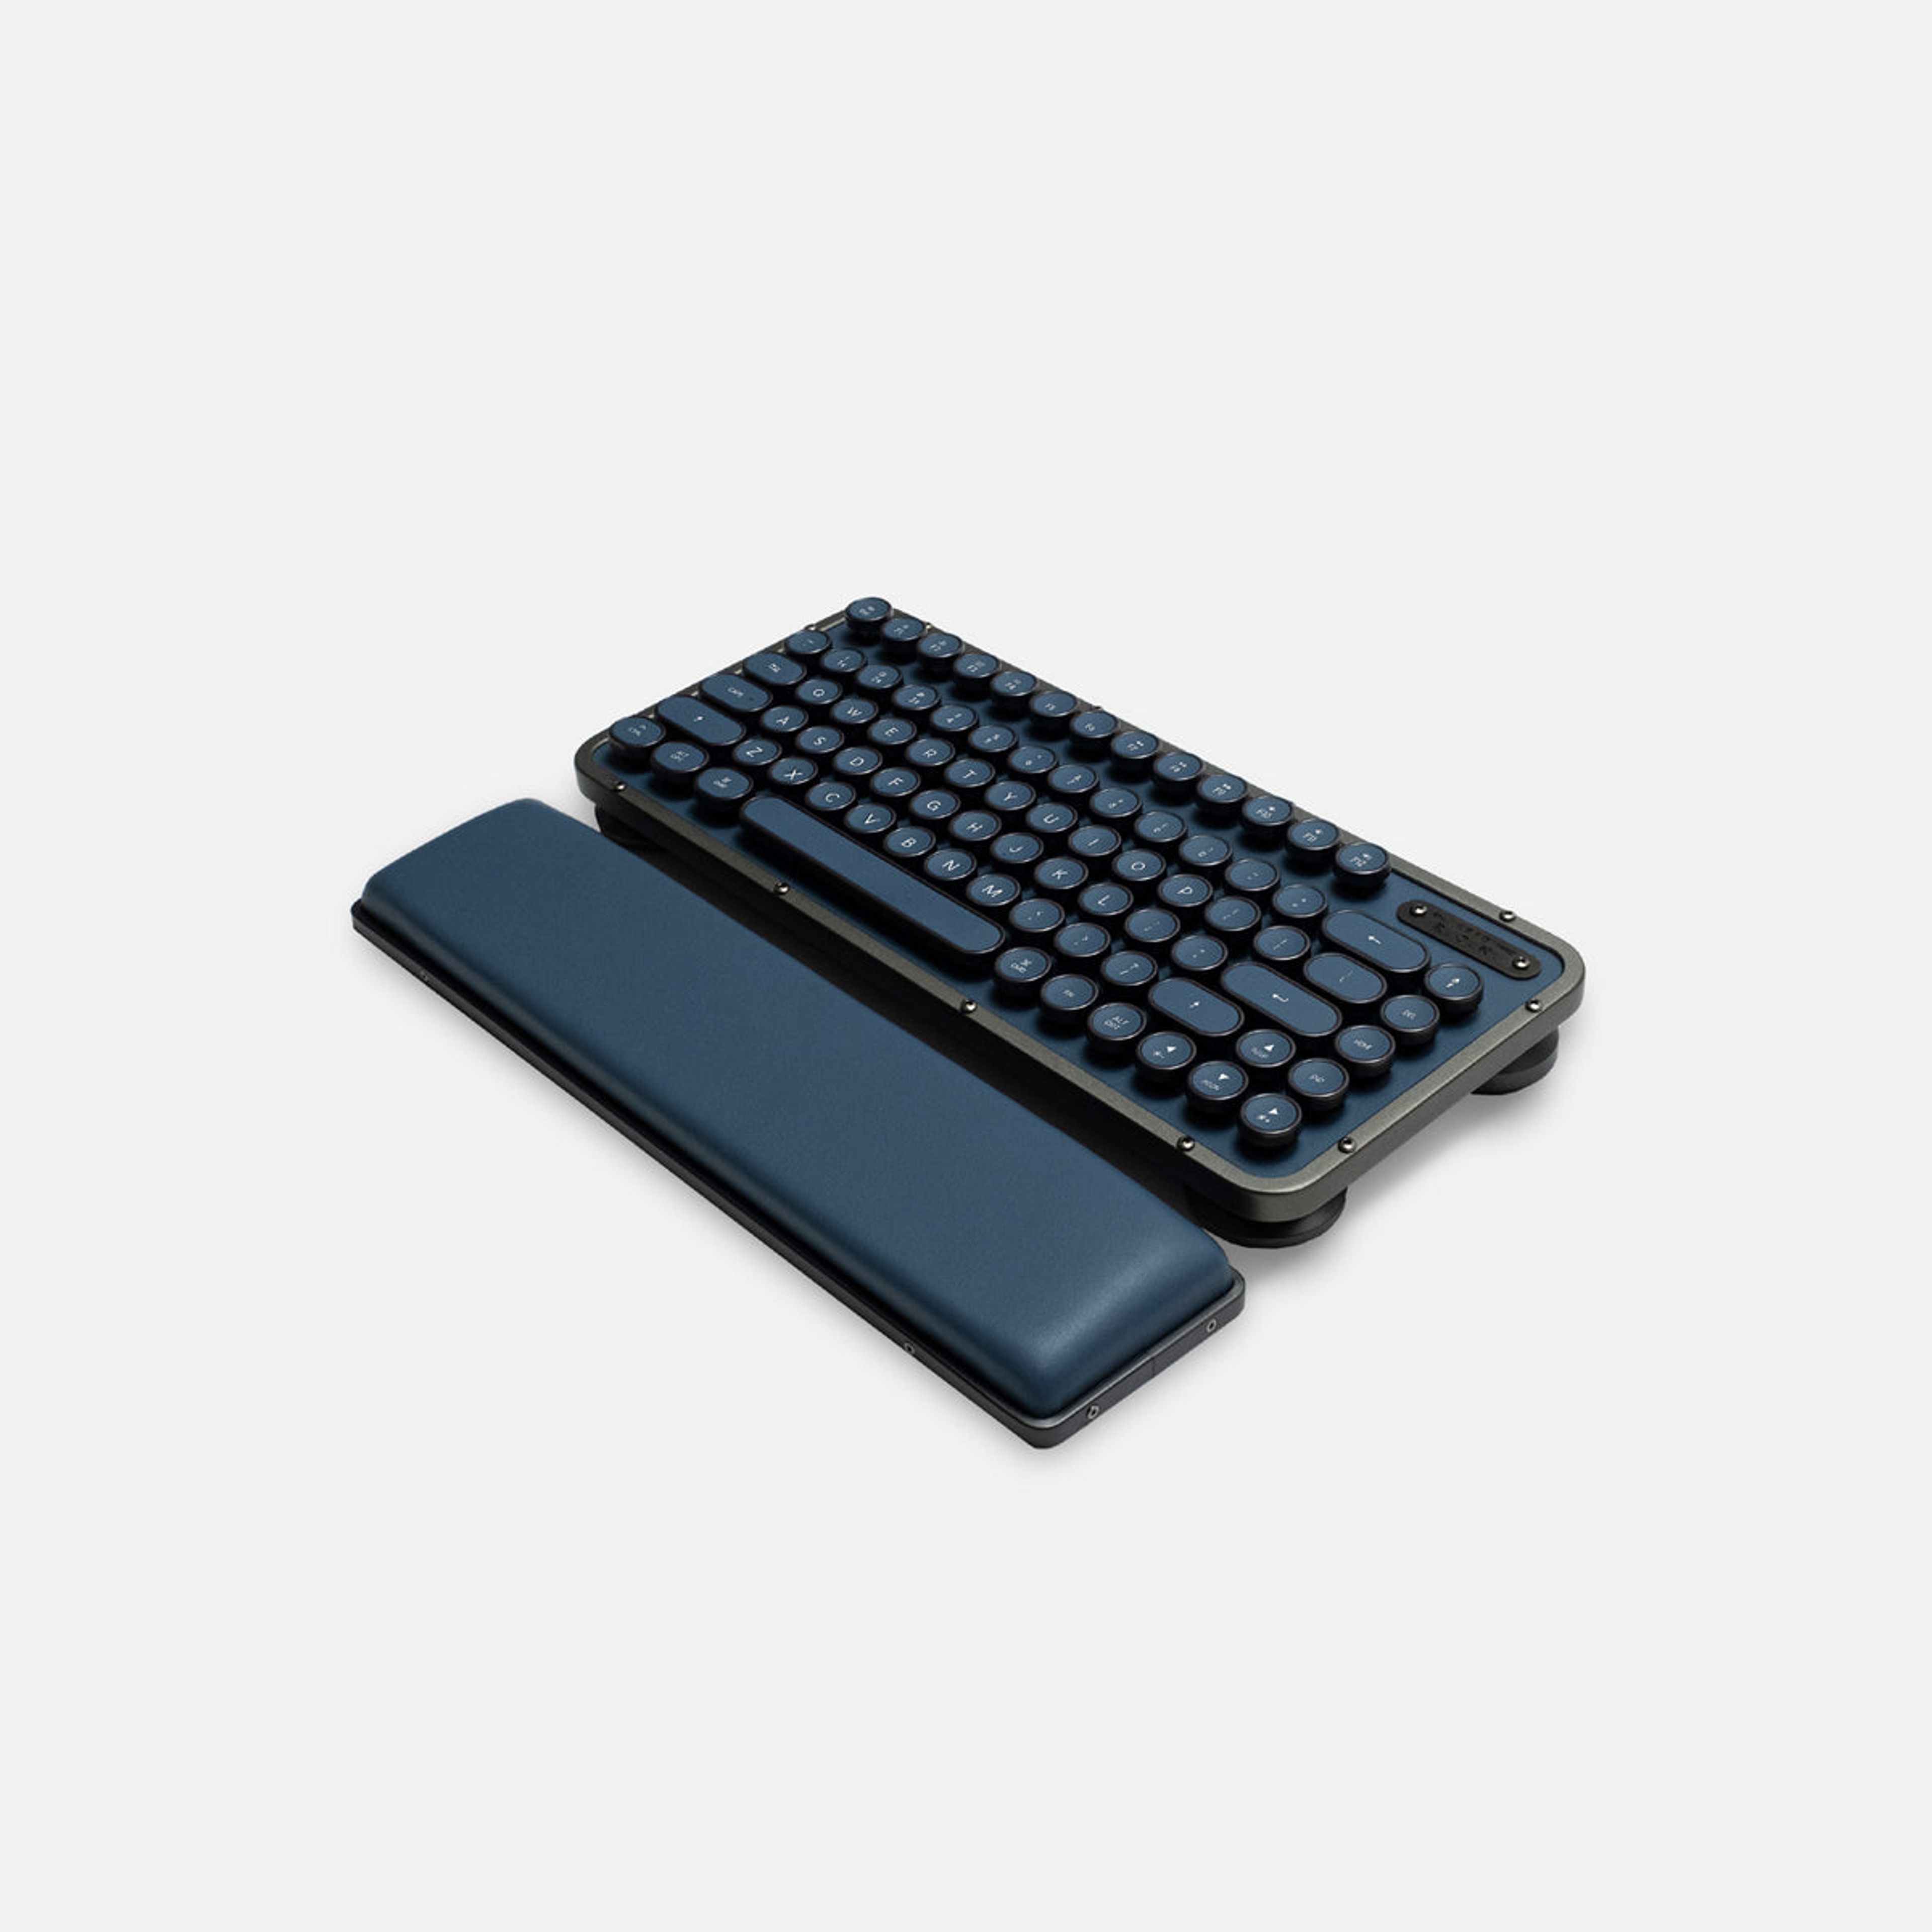 Retro Compact Keyboard Limited Ed Set